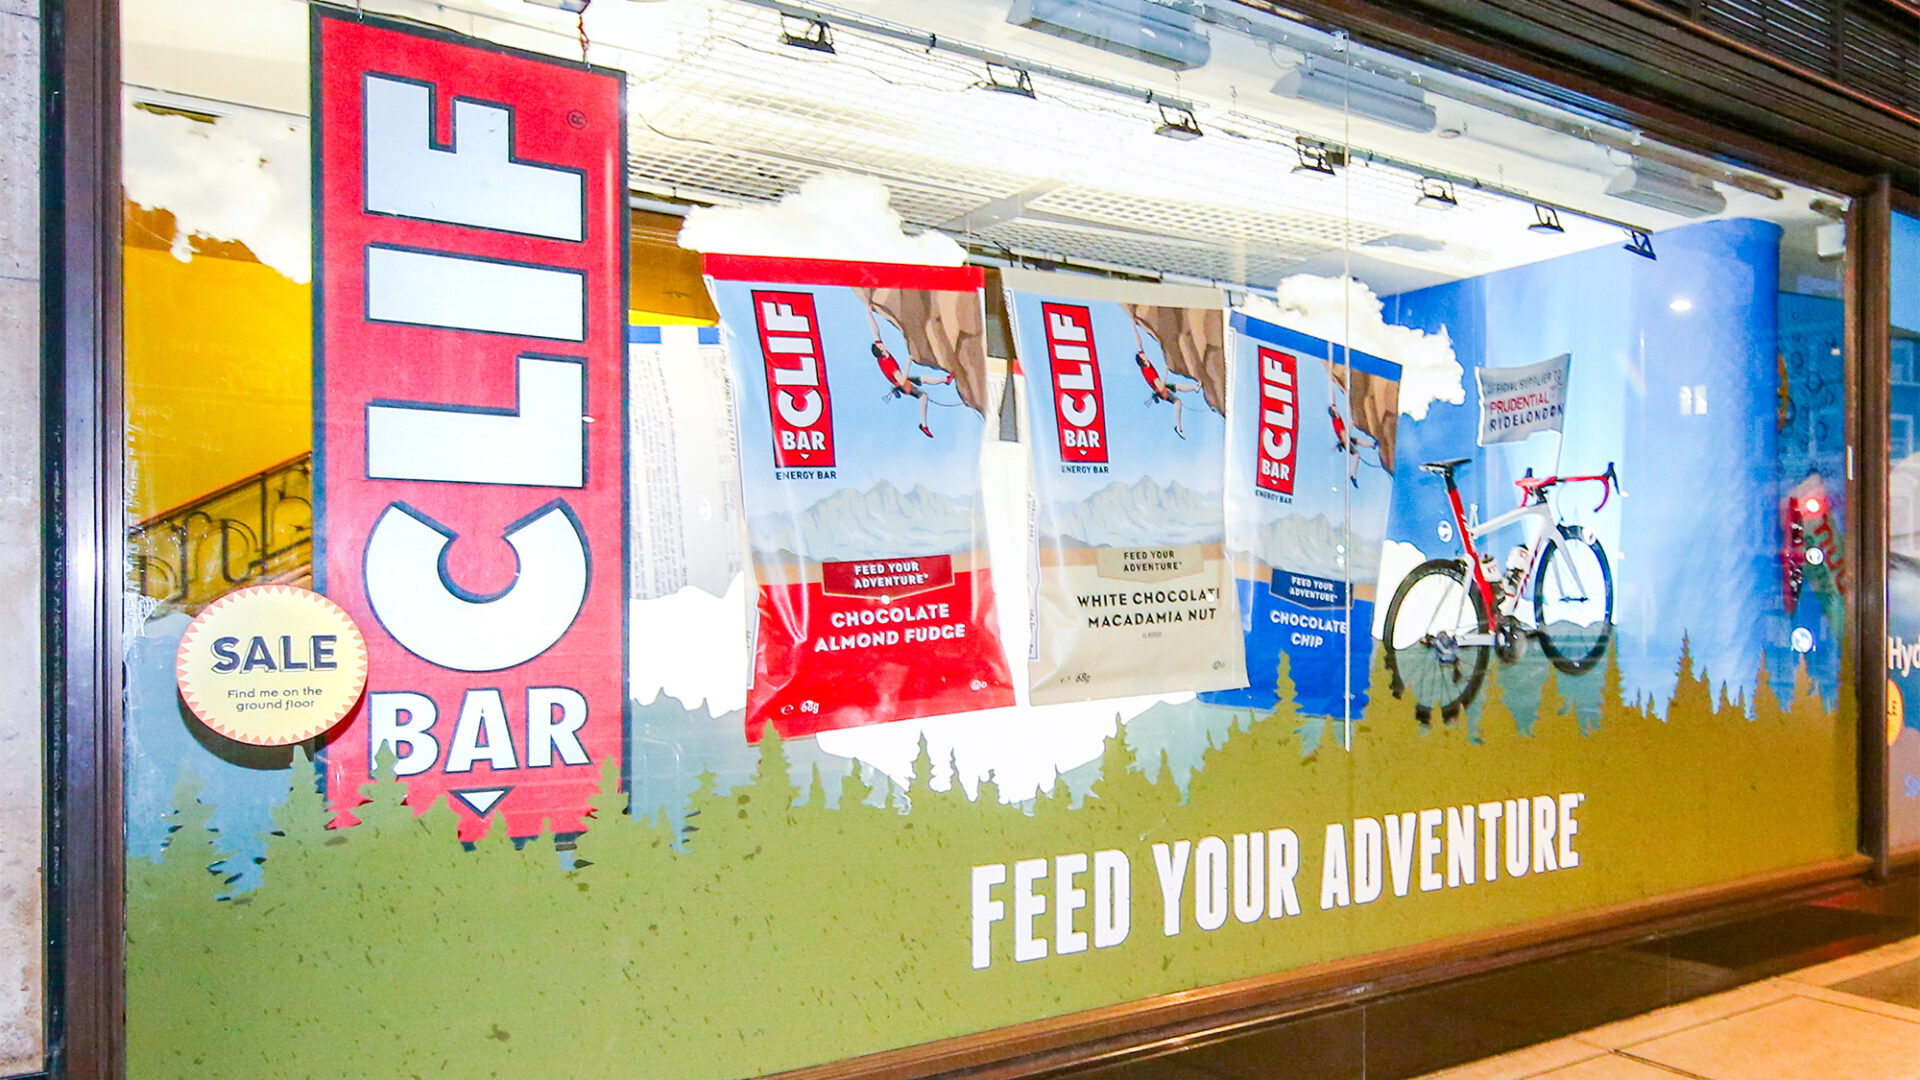 Cliff Bar - Whole Foods Market - Window Display